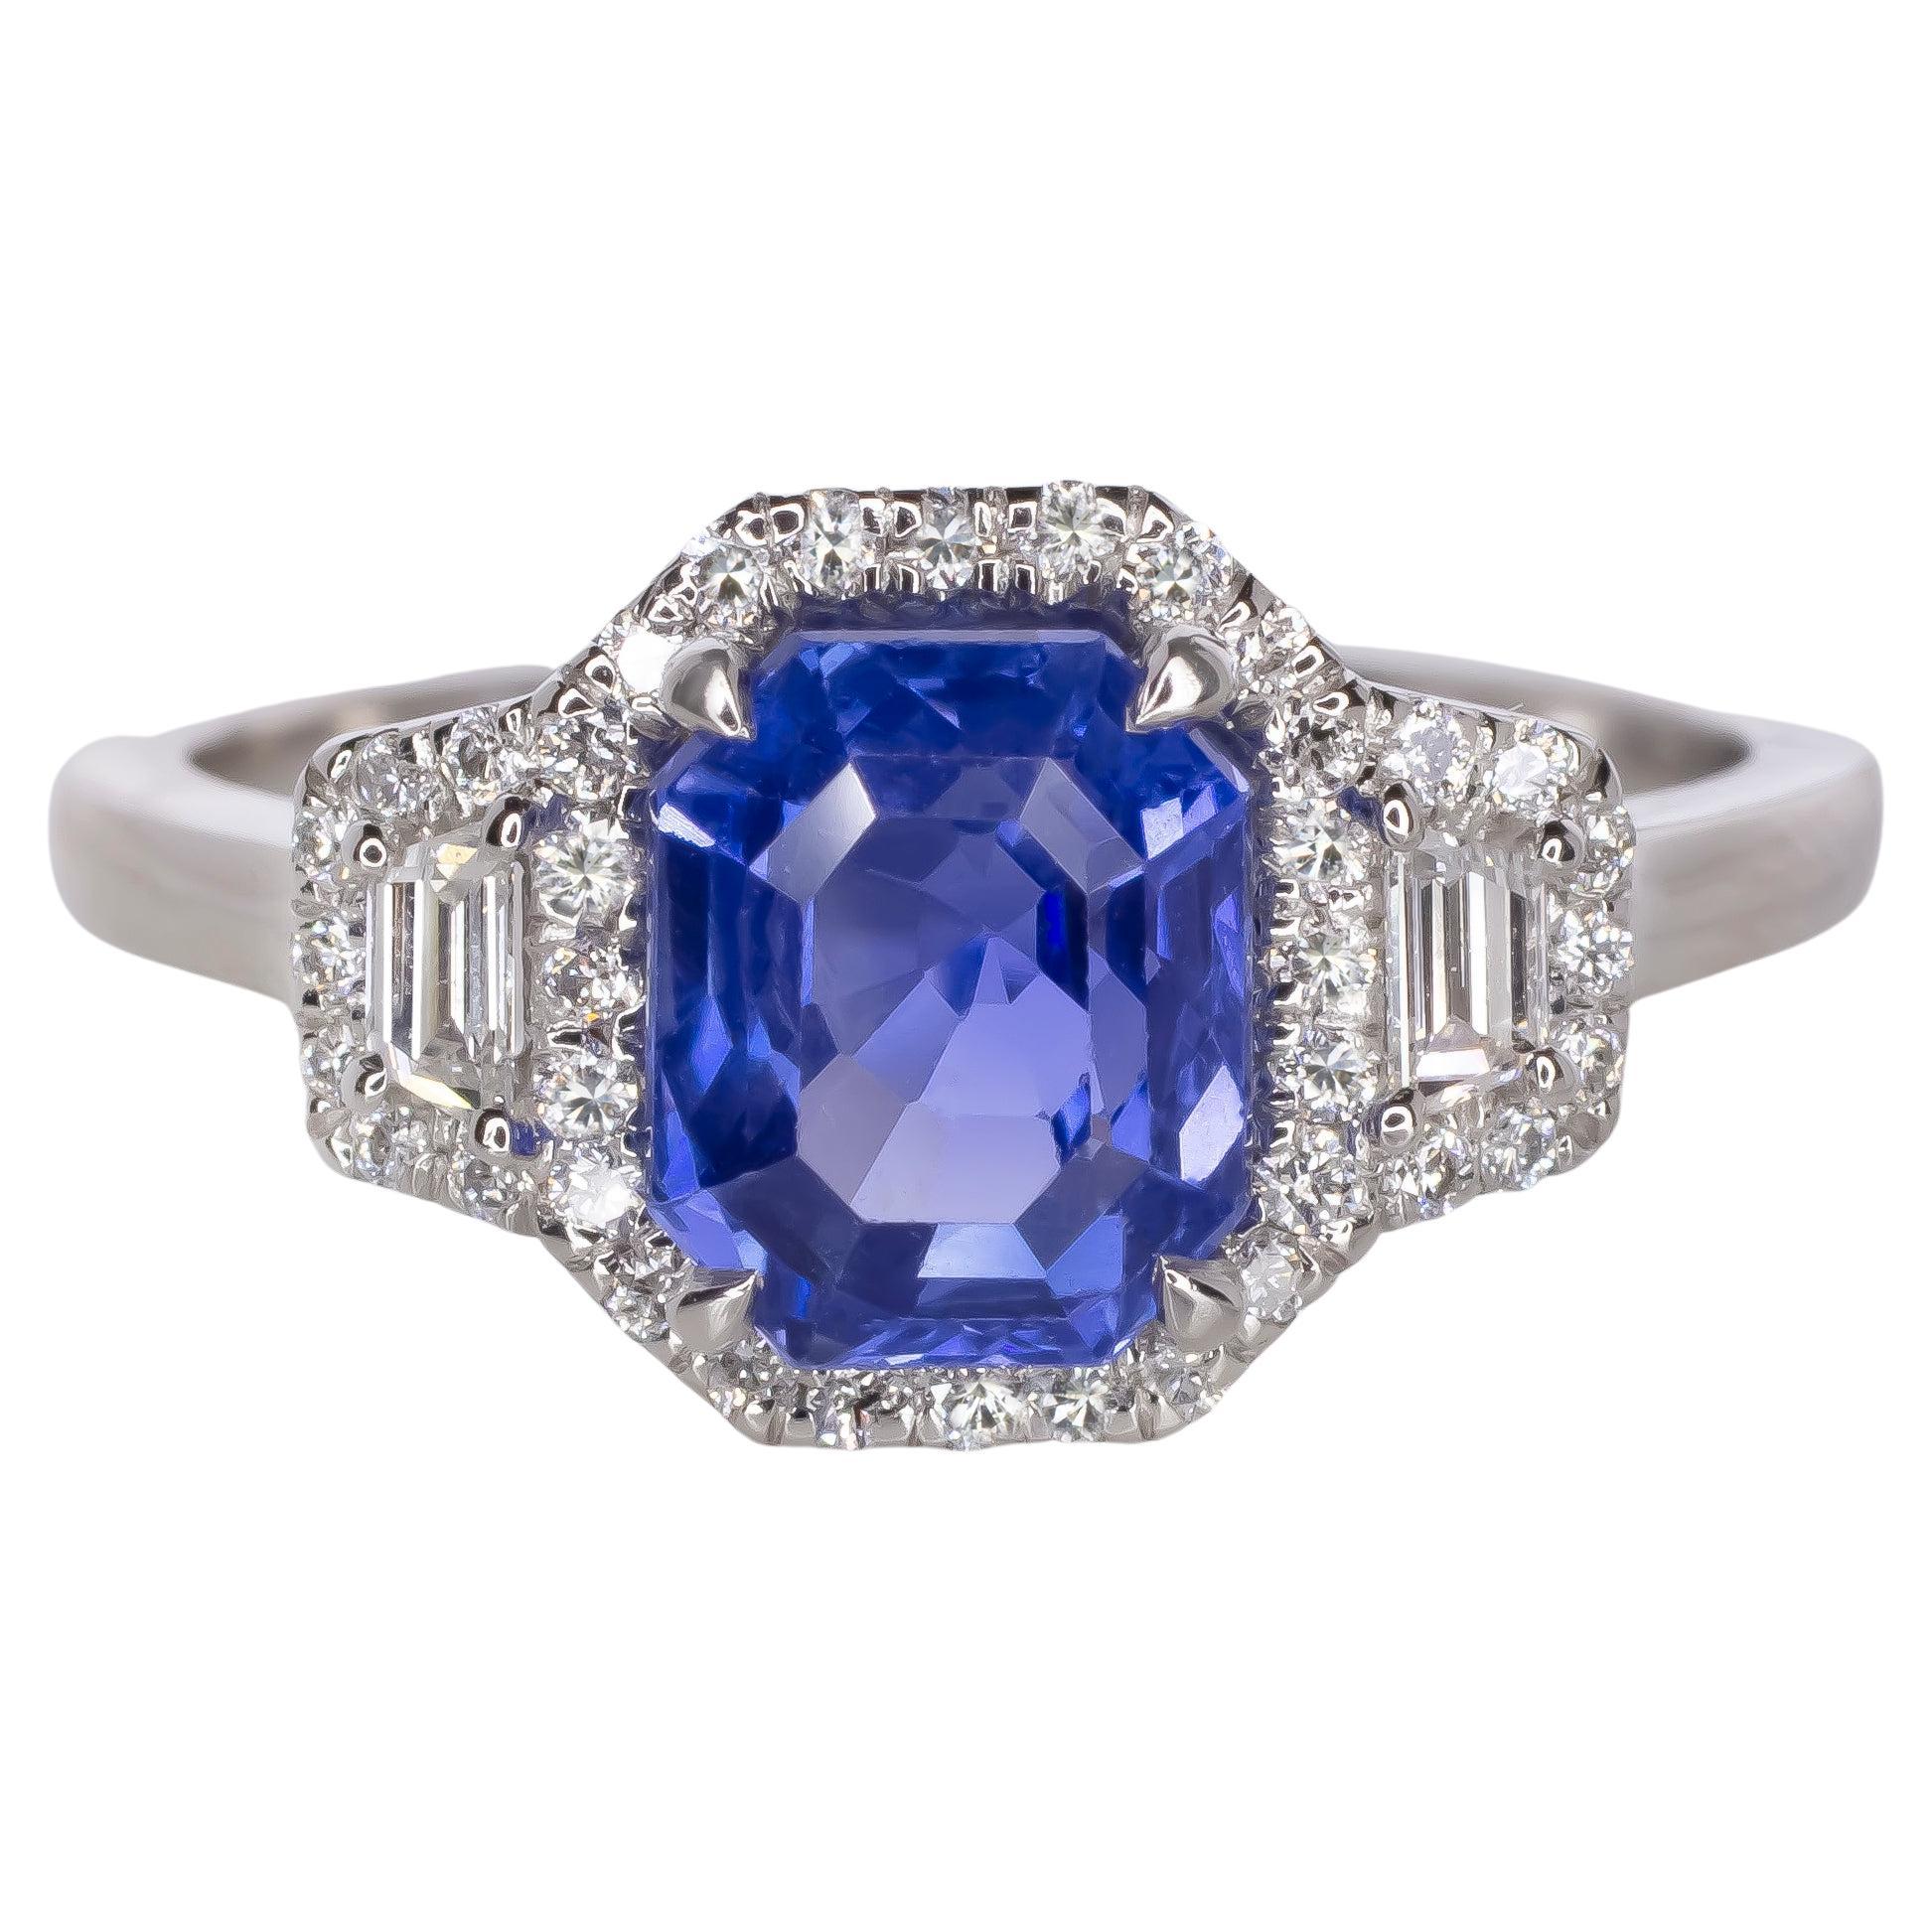 Bague avec diamant émeraude bleu roi du Sri Lanka non chauffée certifiée GIA 